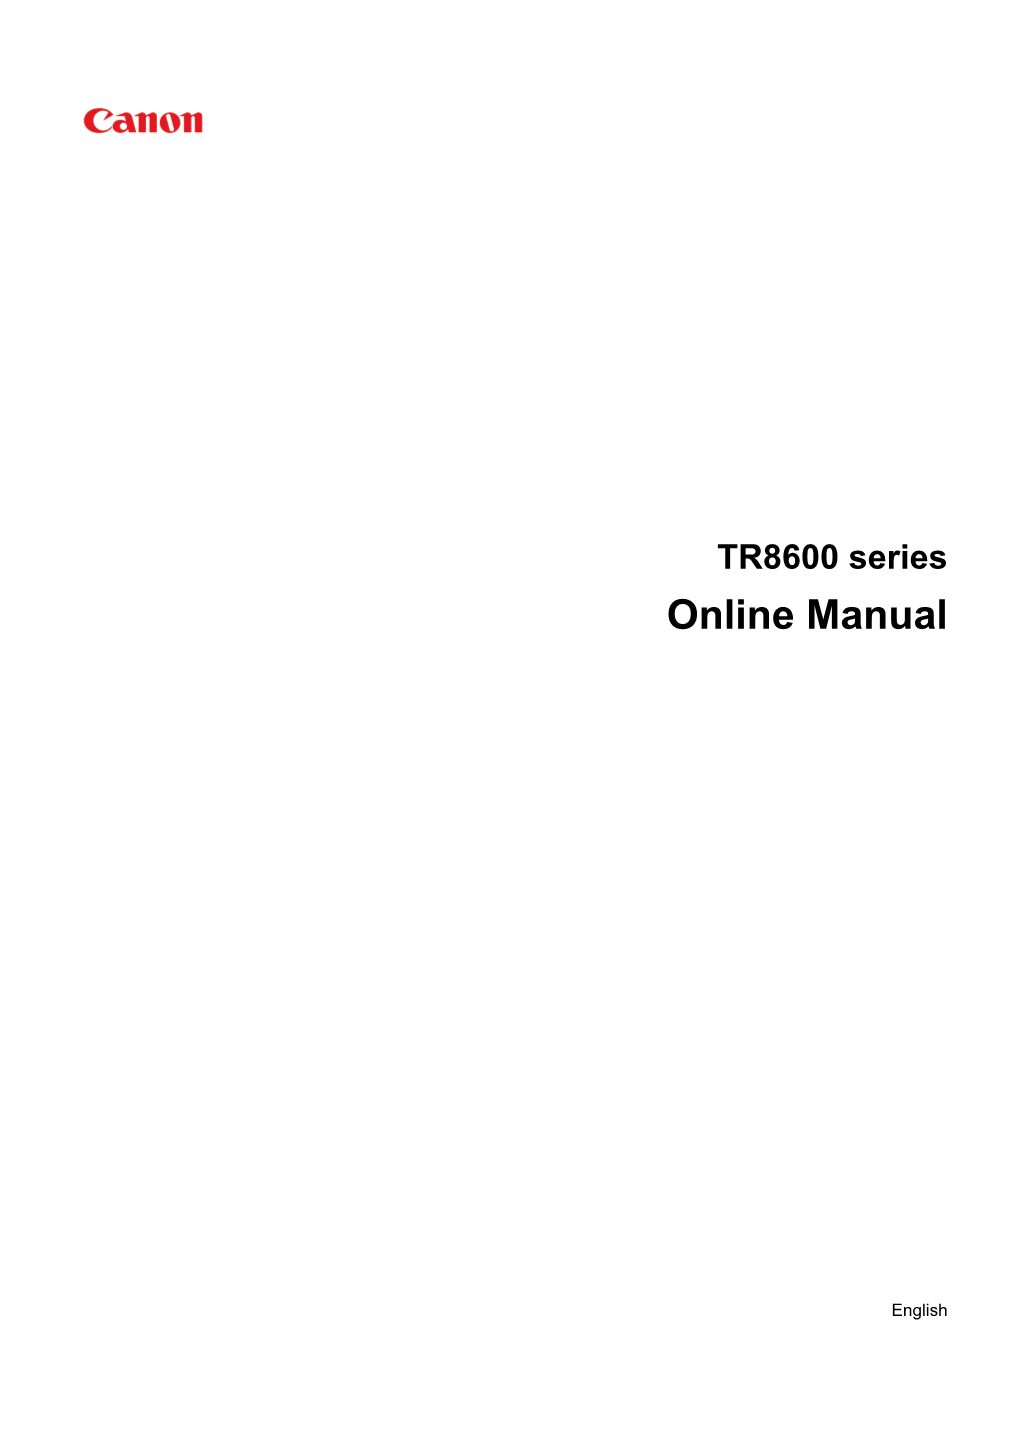 TR8600 Series Online Manual